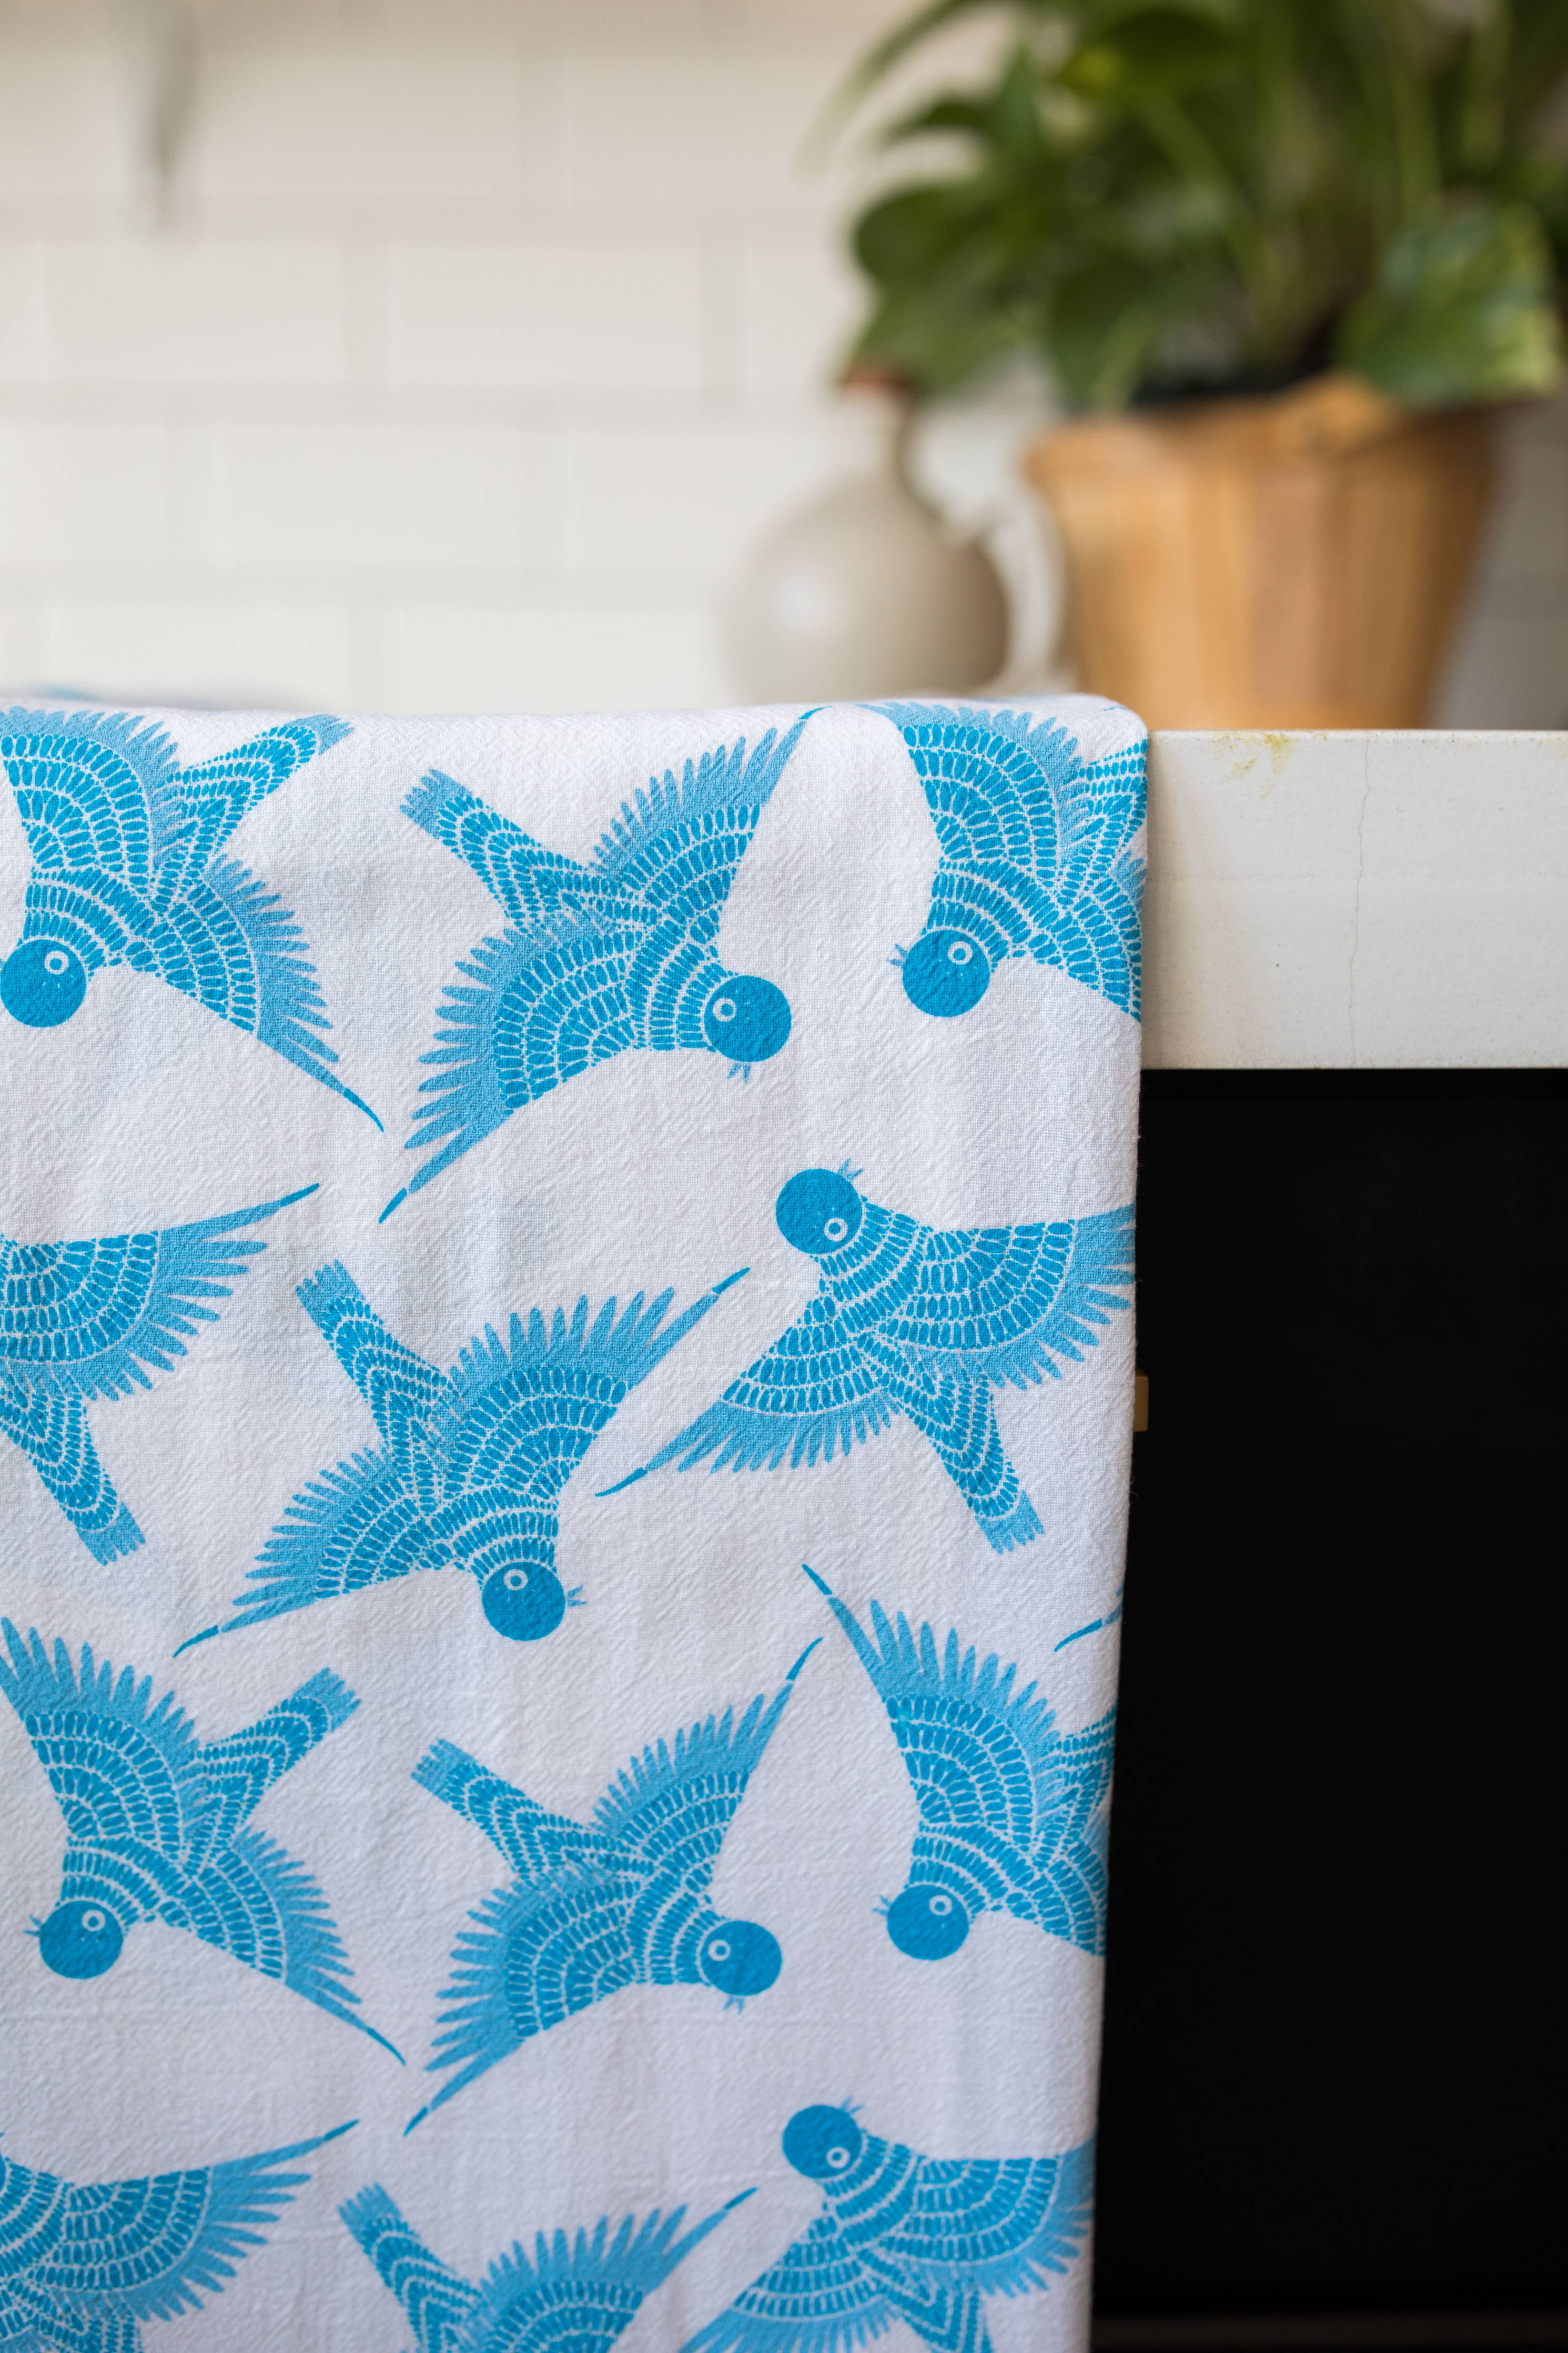 Bluebird Tea Towel